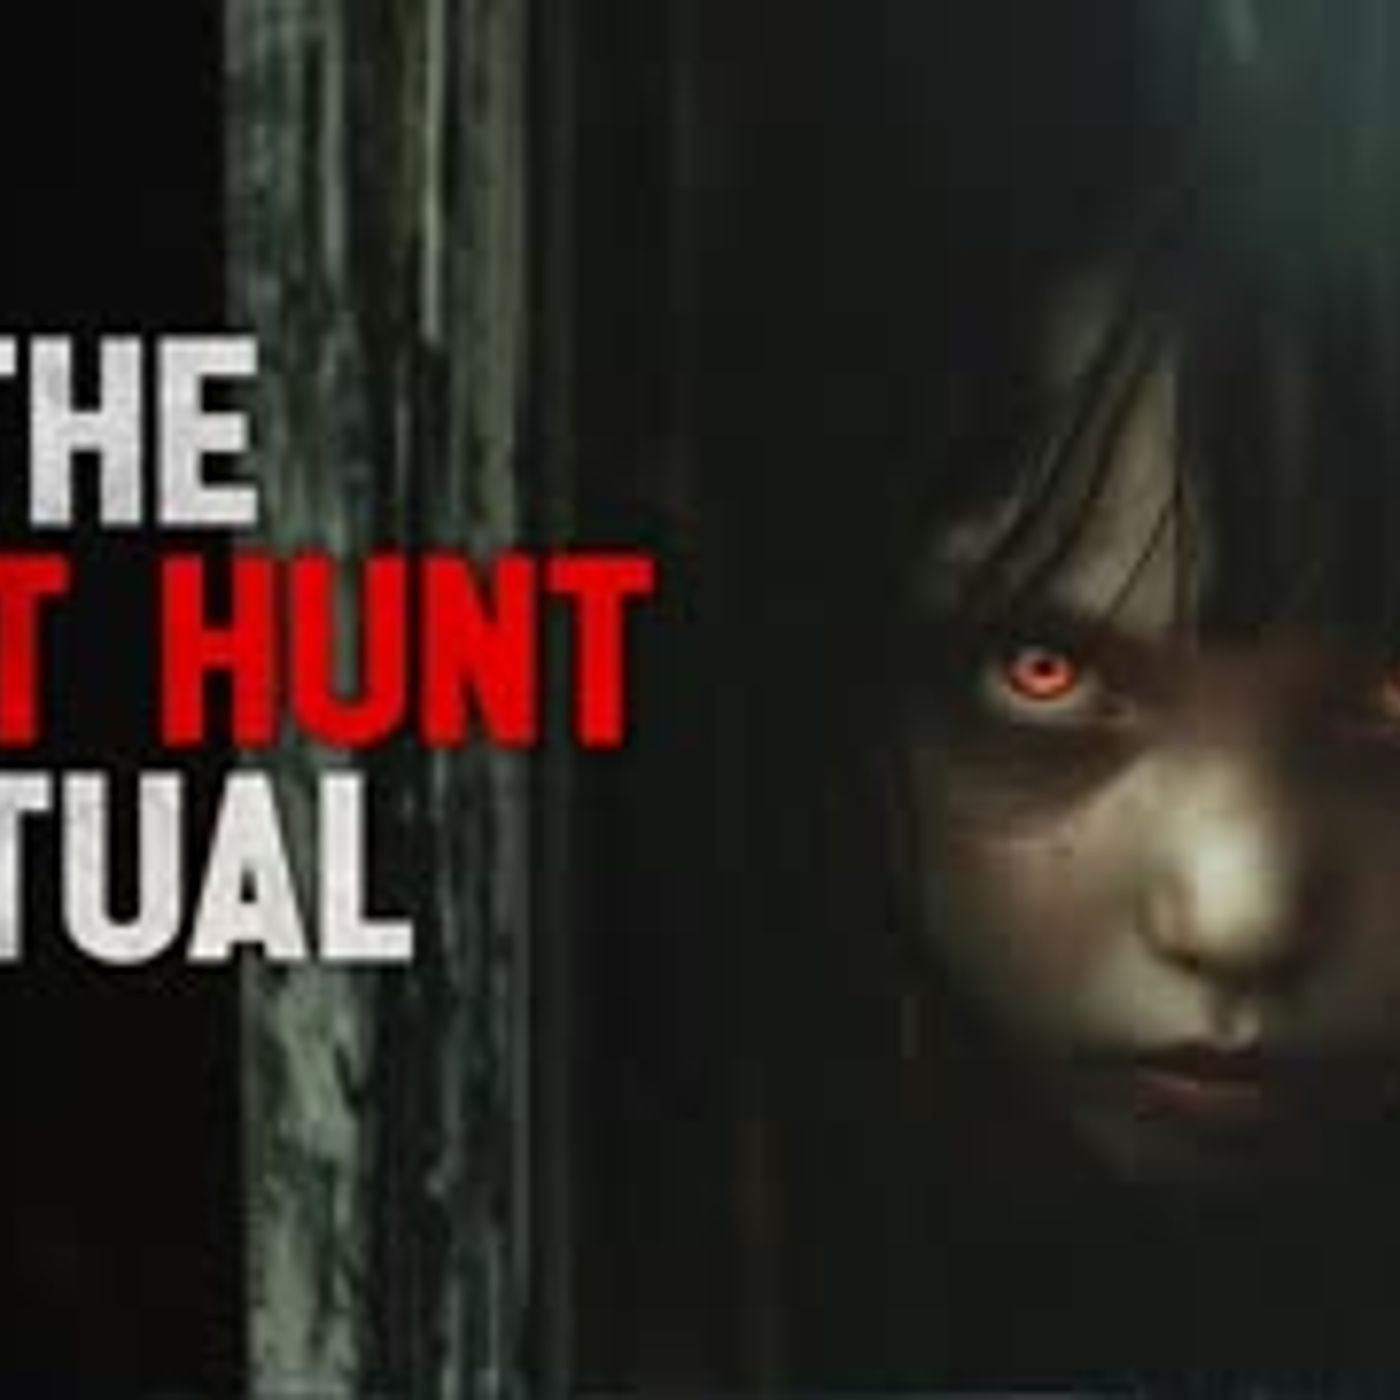 "The Night Hunt Ritual" Creepypasta